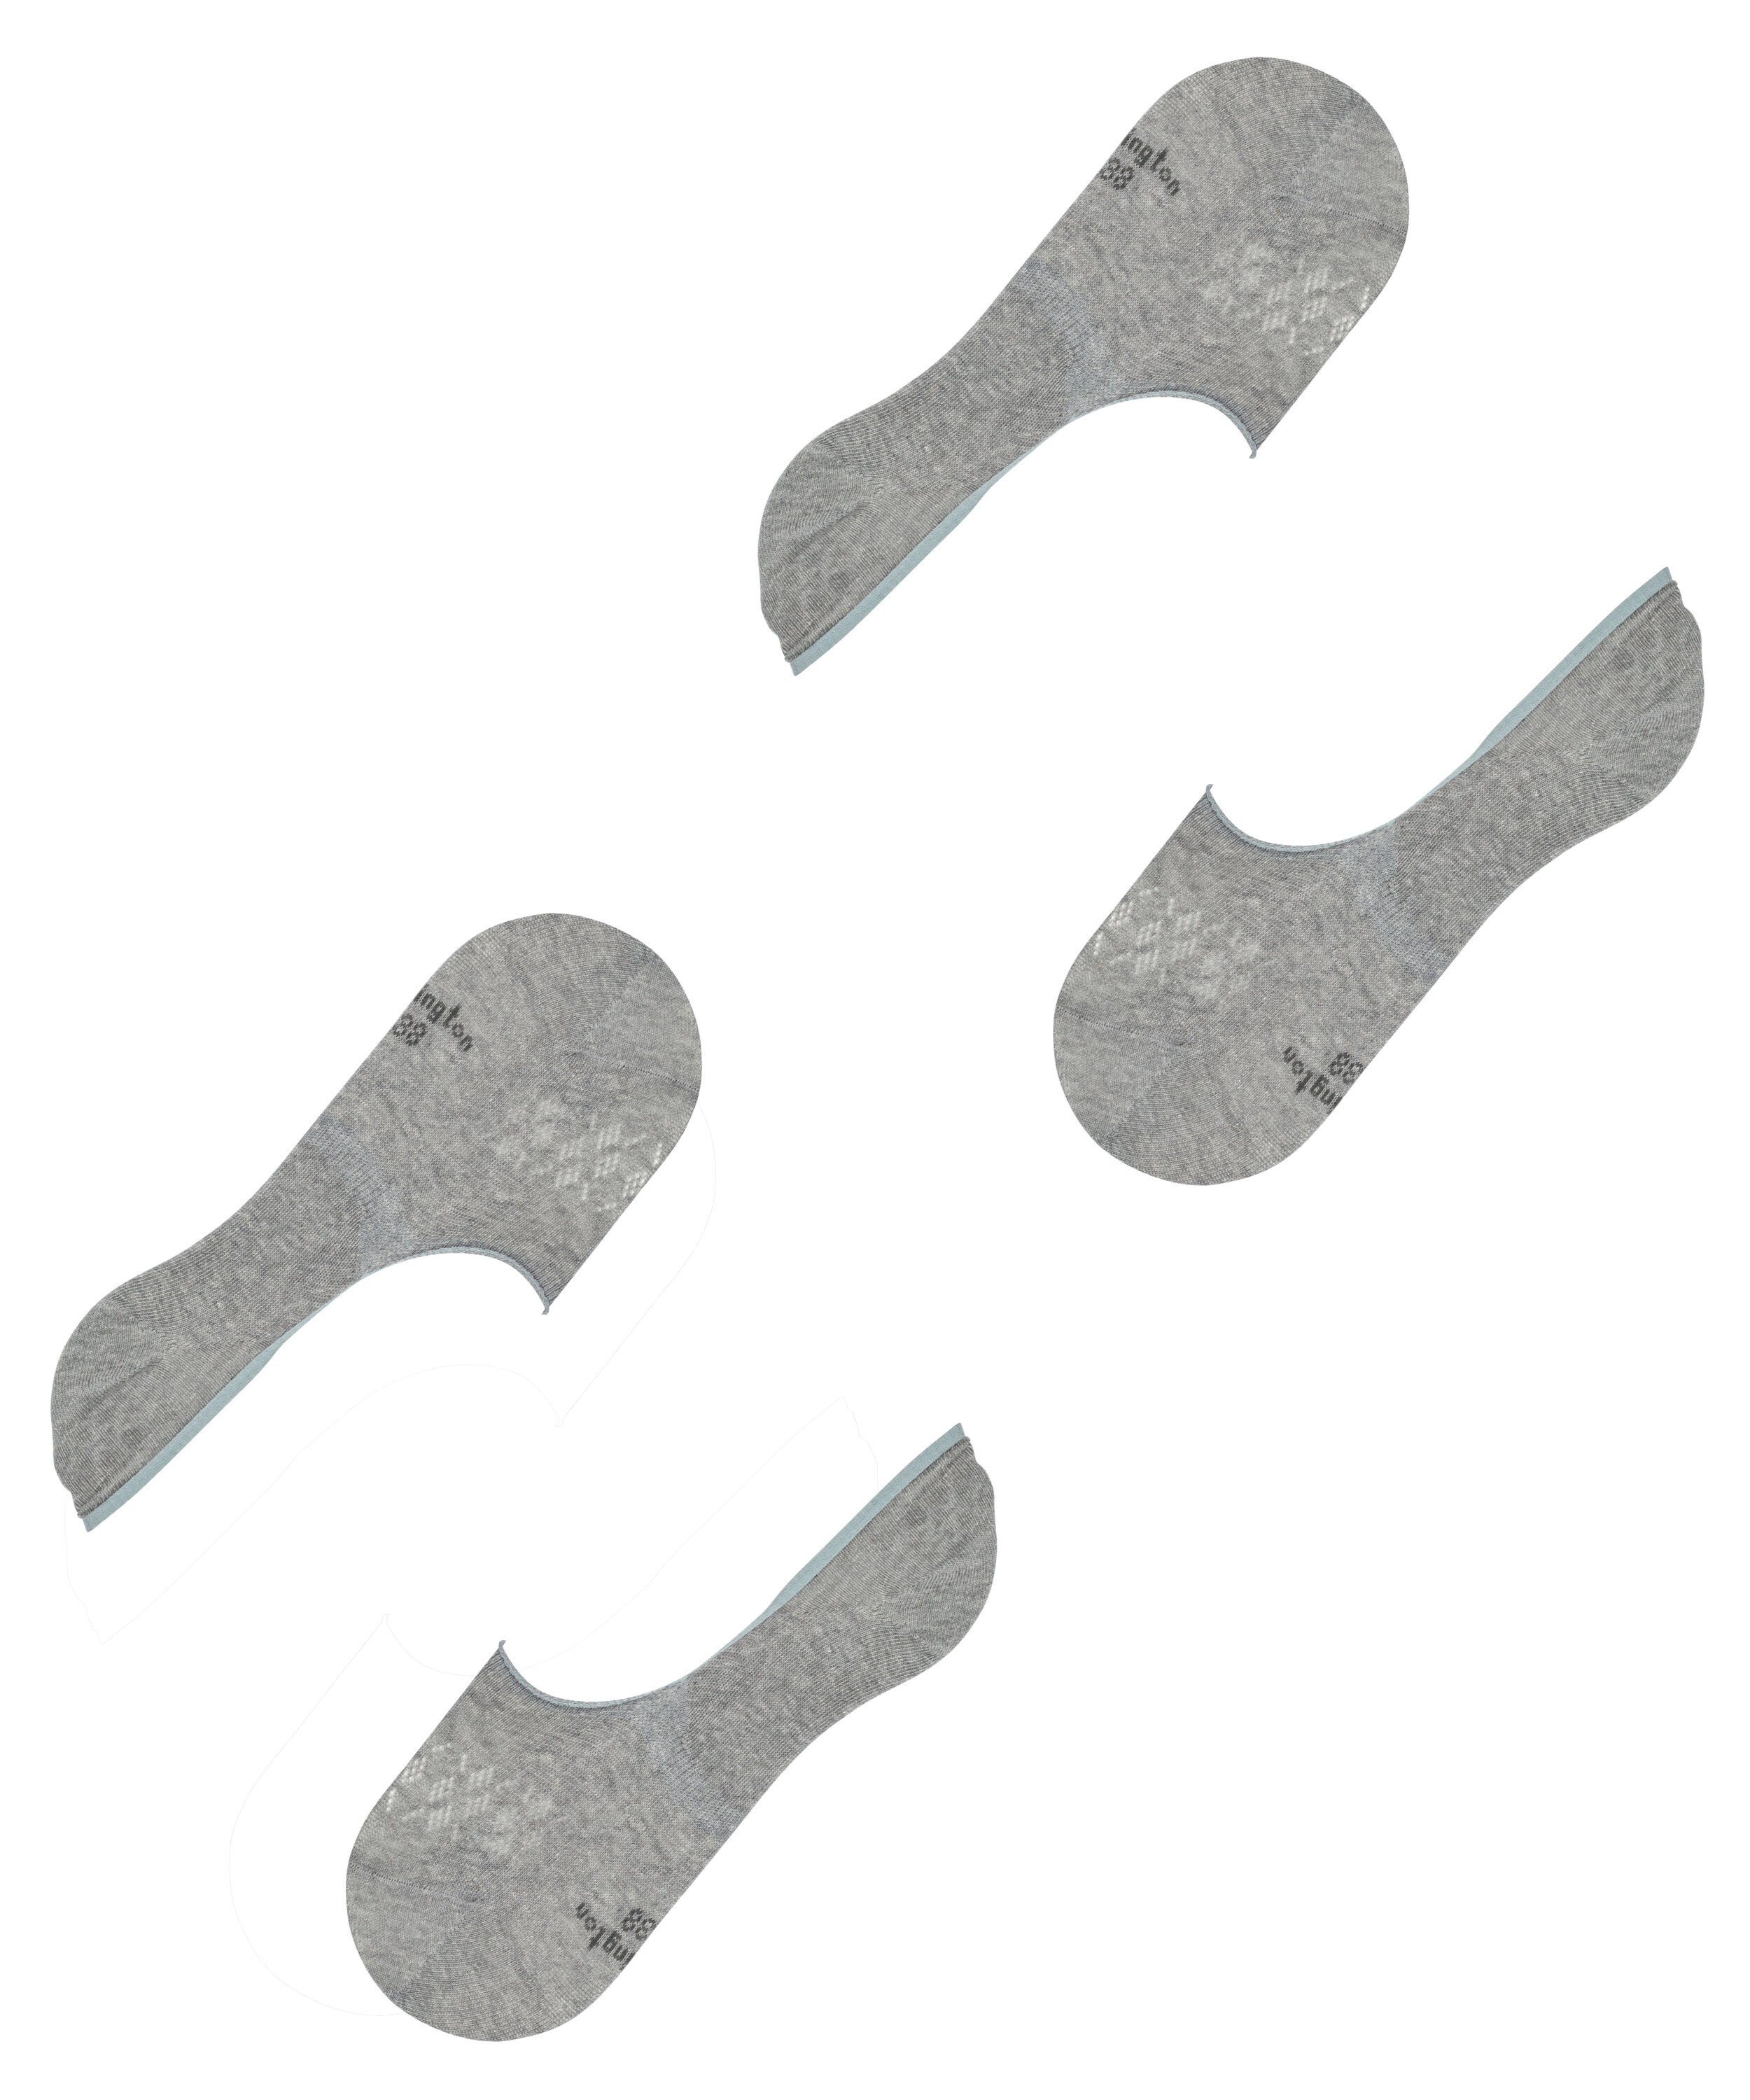 Everyday Füßlinge (3400) grey mit Anti-Slip-System 2-Pack Burlington light